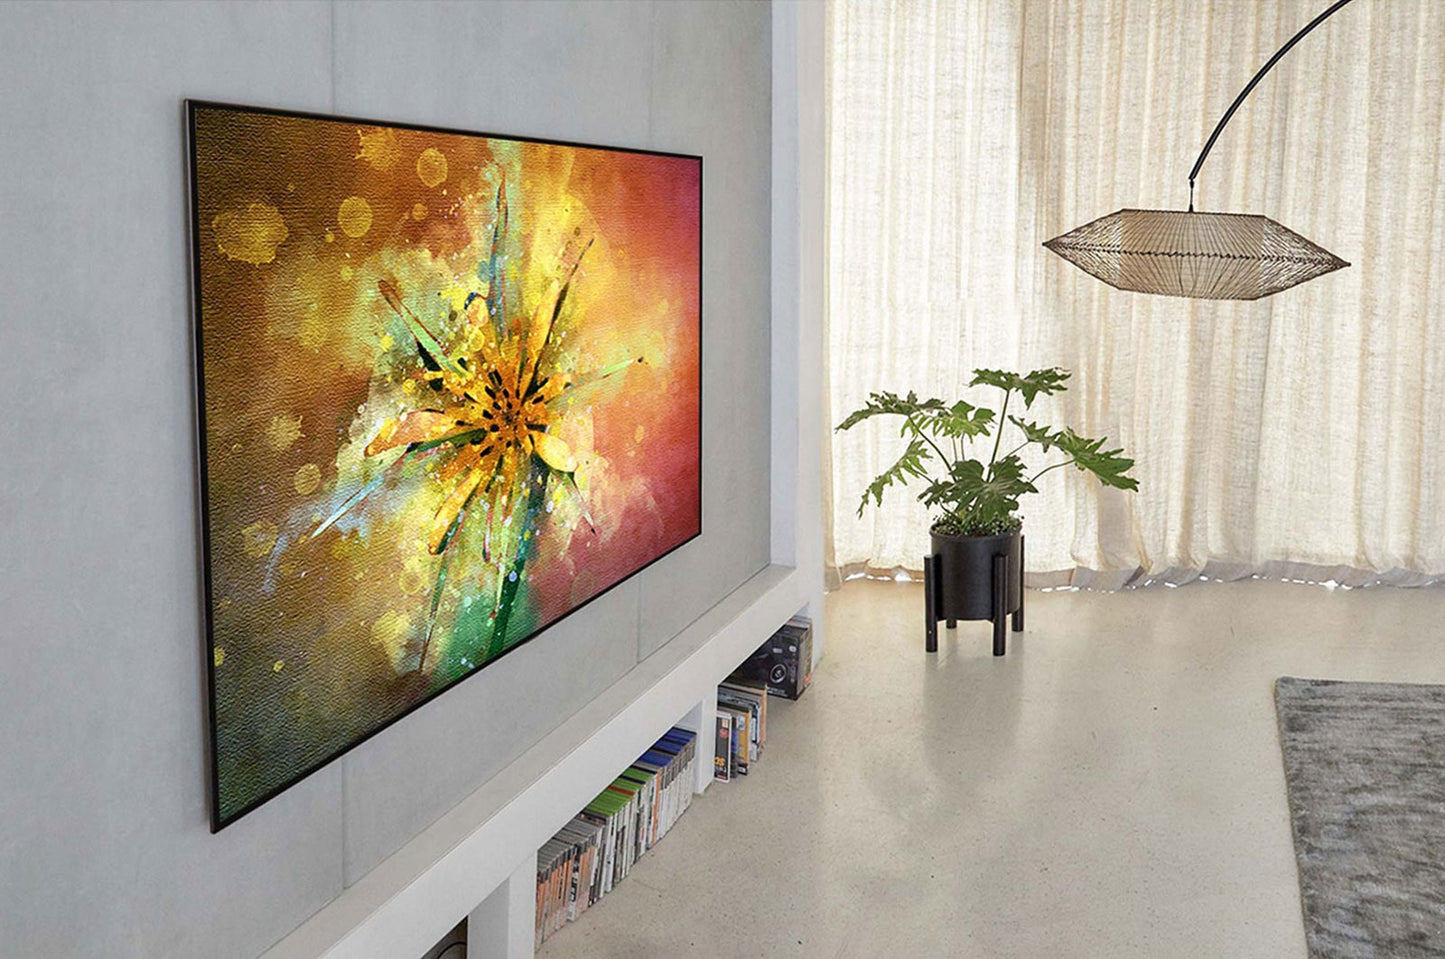 LG SIGNATURE ZX 77 inch Class 8K Smart OLED TV w/AI ThinQ® (76.7'' Diag)